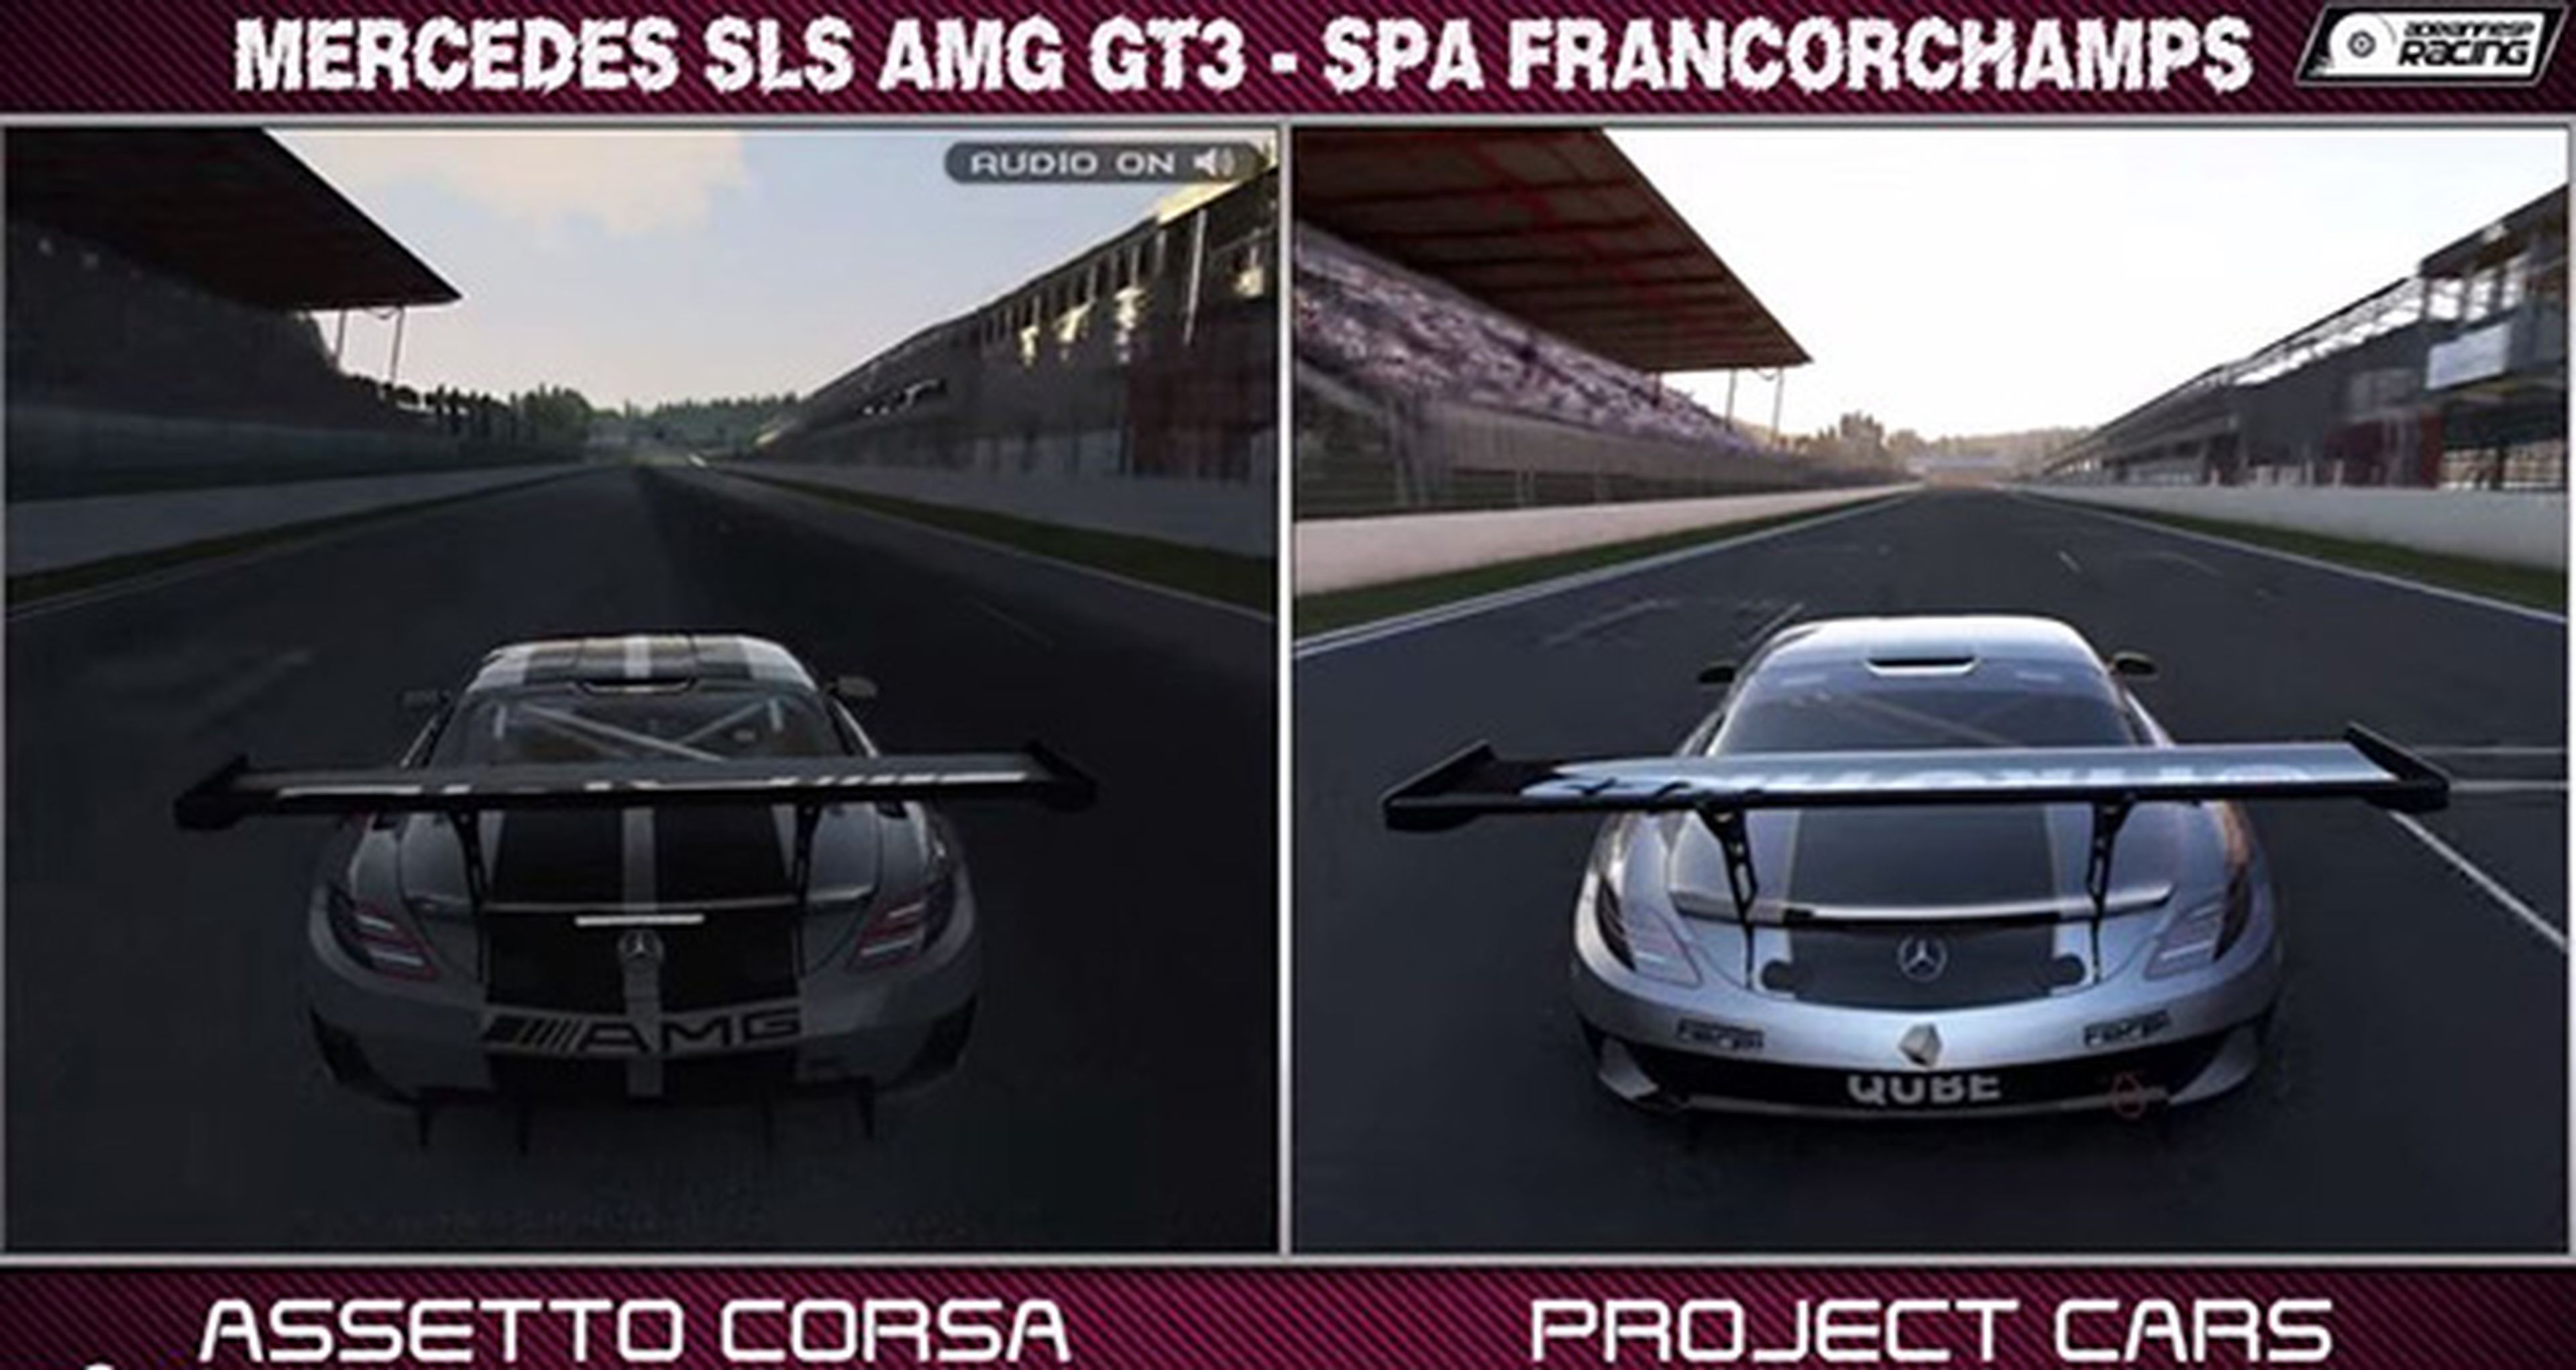 Vídeo comparativo de Project CARS vs Assetto Corsa